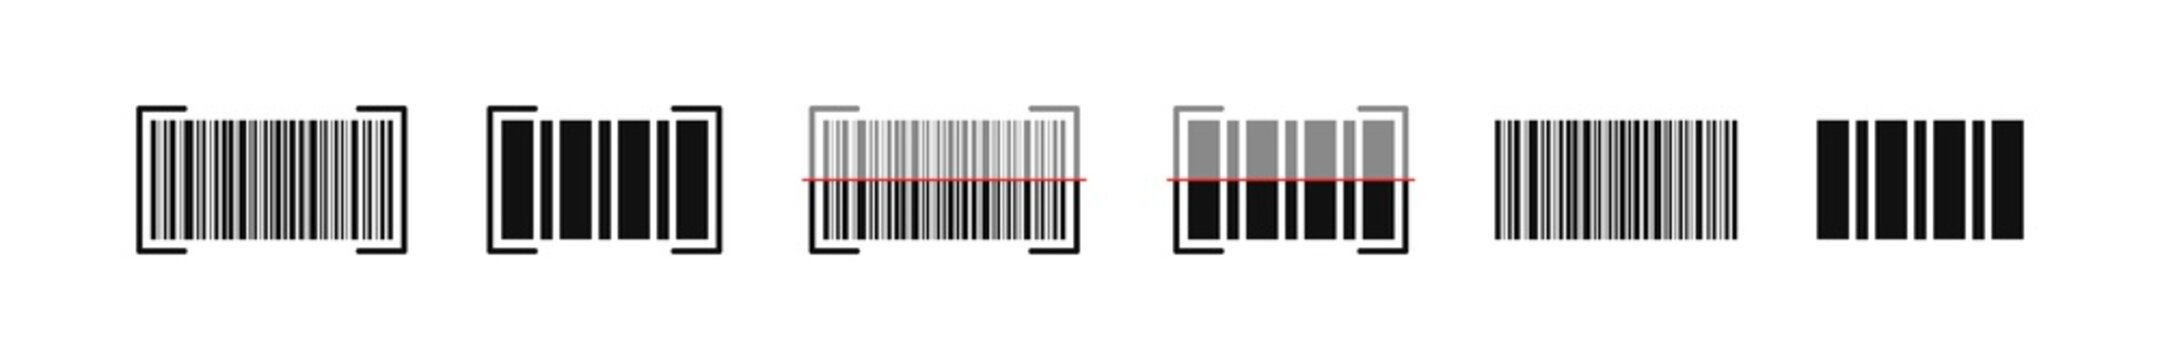 Barcode scanning vector icon, bar code scan laser islated symbol illustration